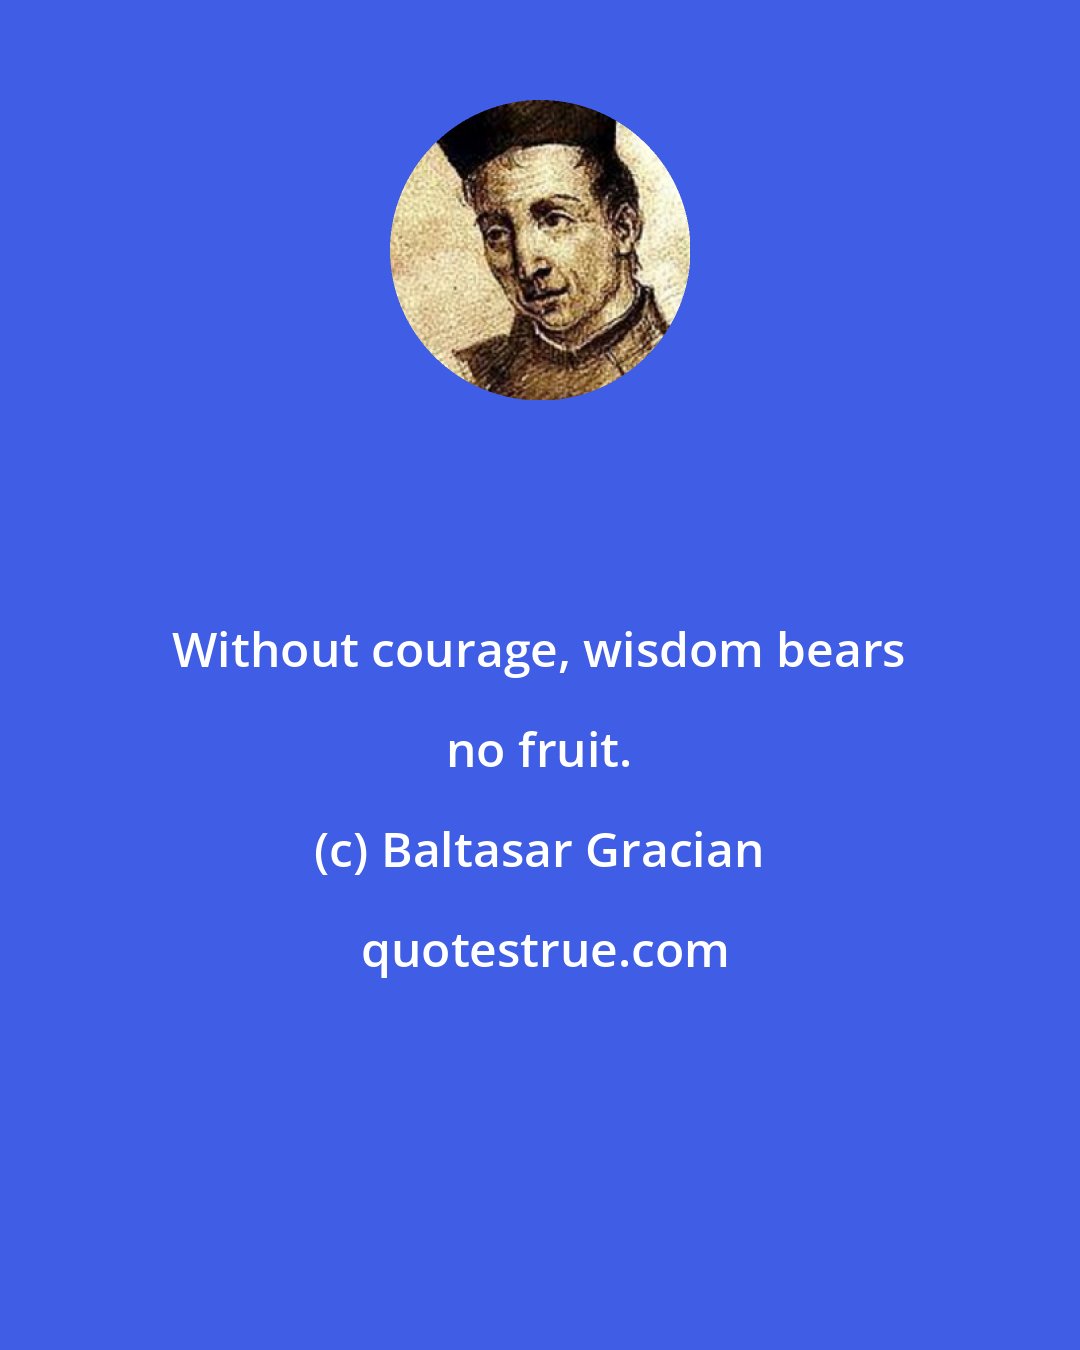 Baltasar Gracian: Without courage, wisdom bears no fruit.